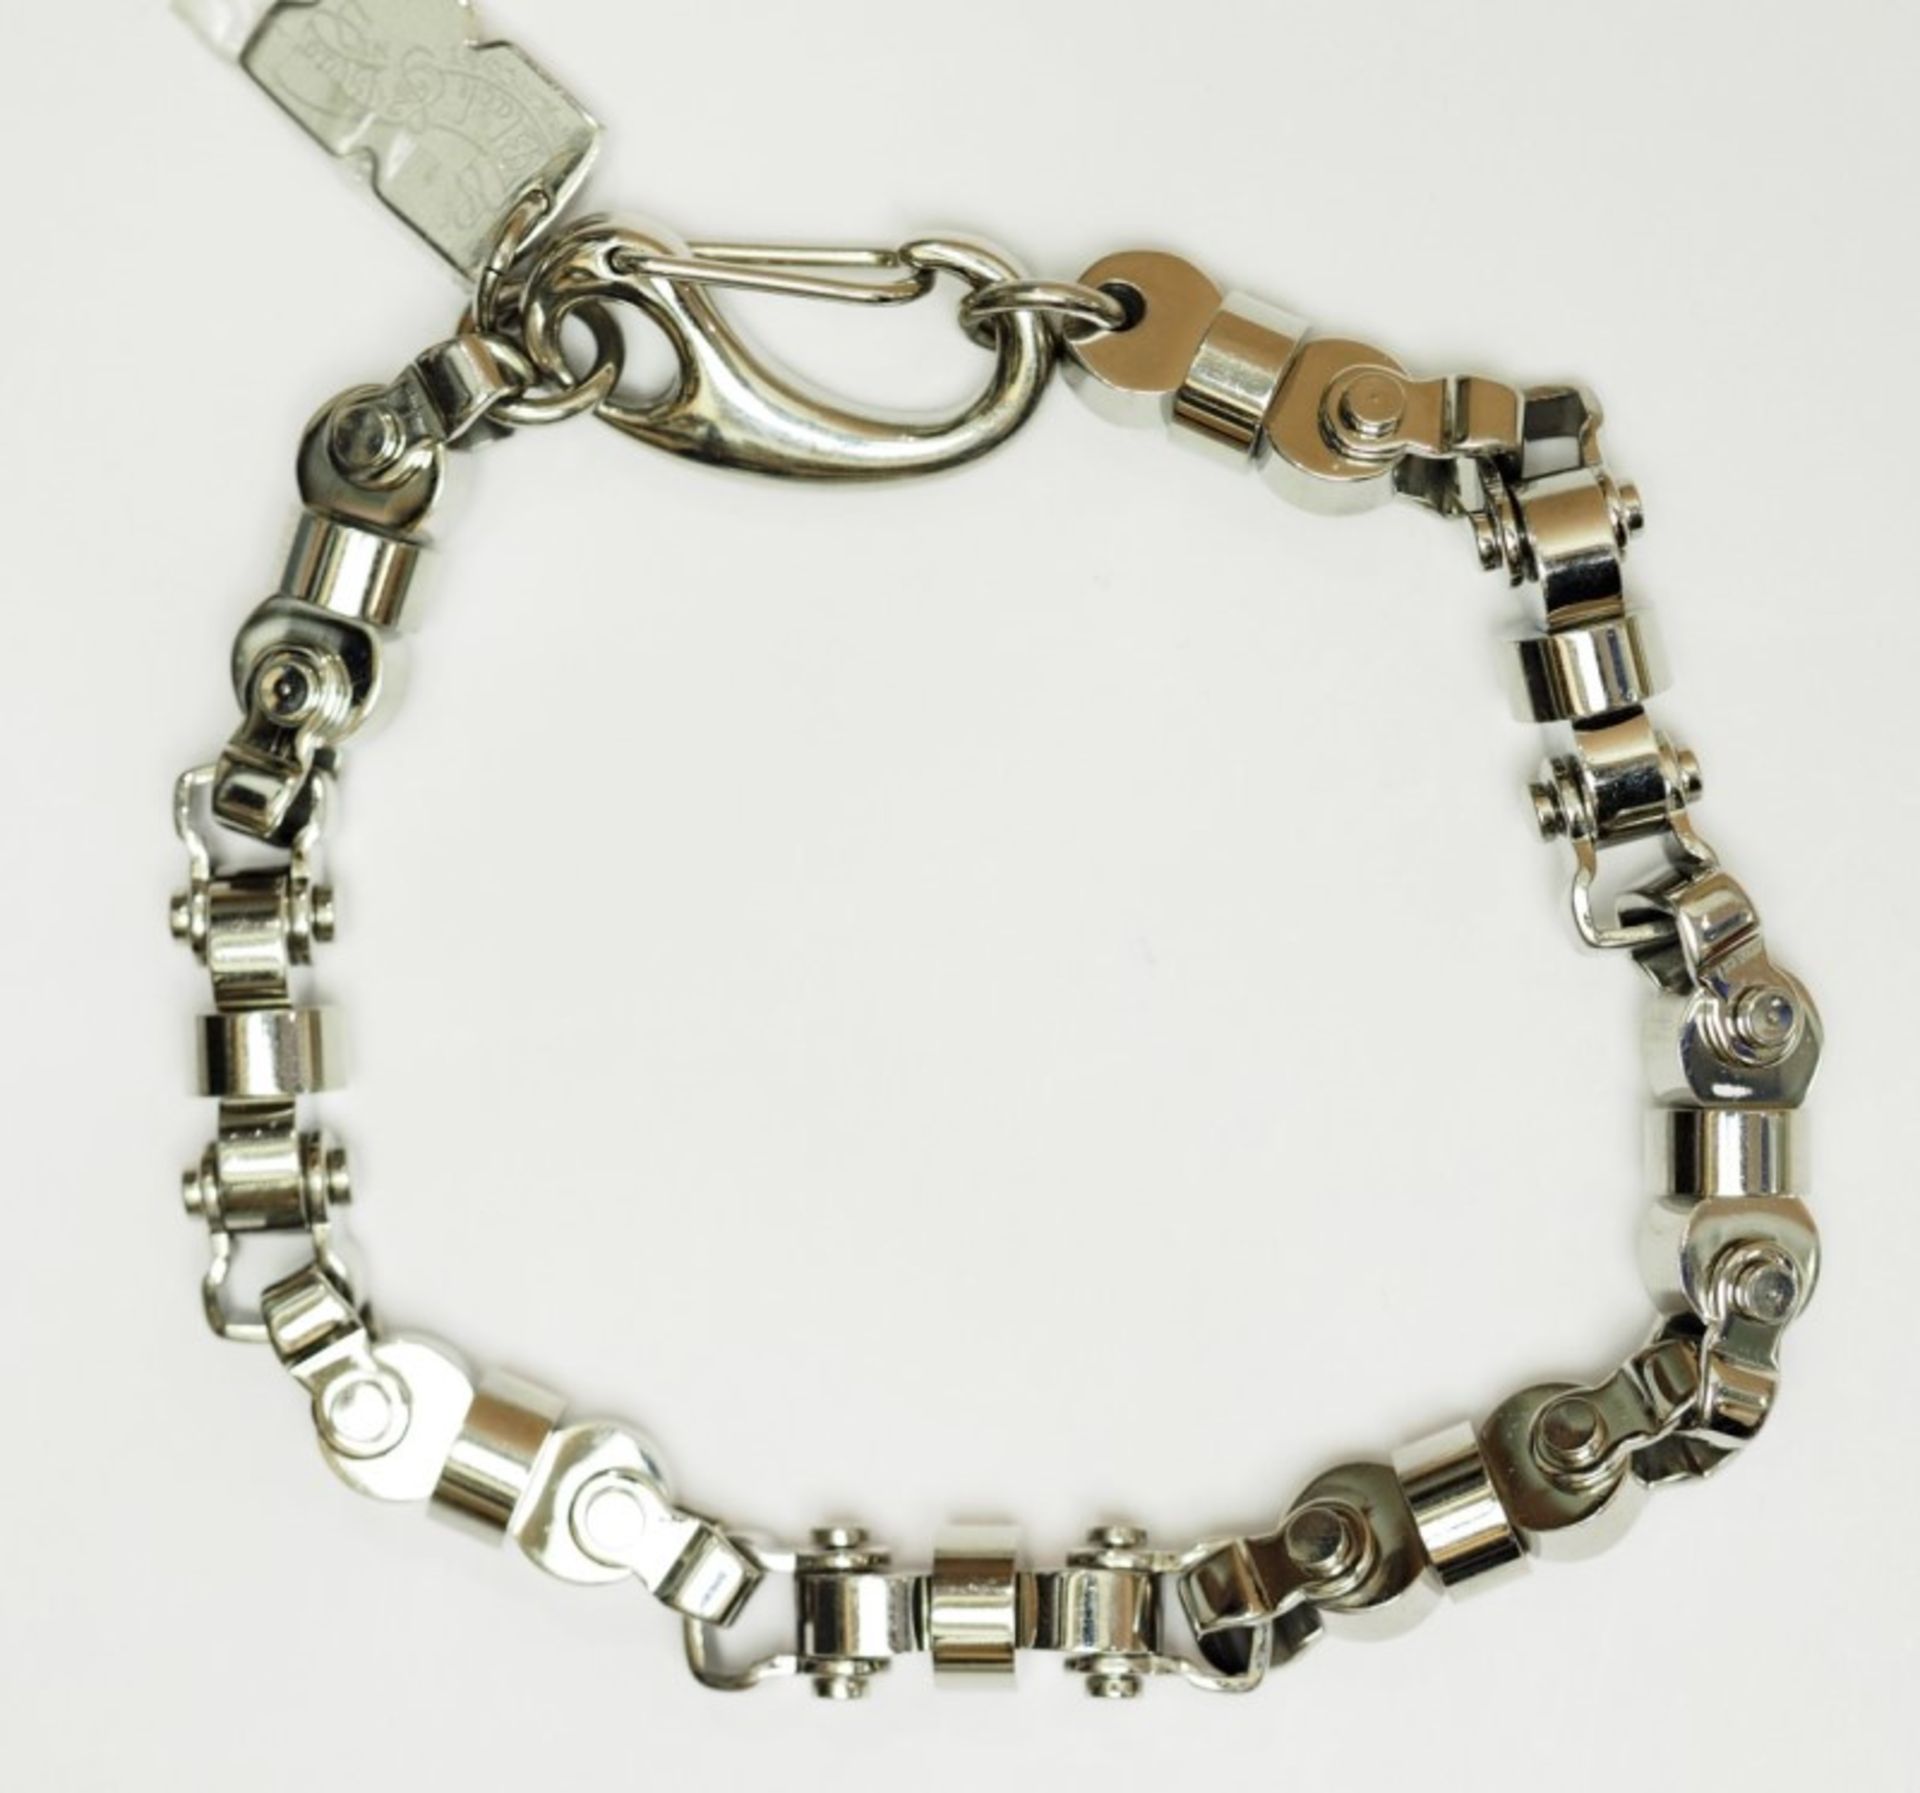 Stainless Steel Machlin Part Bracelet Retail $180